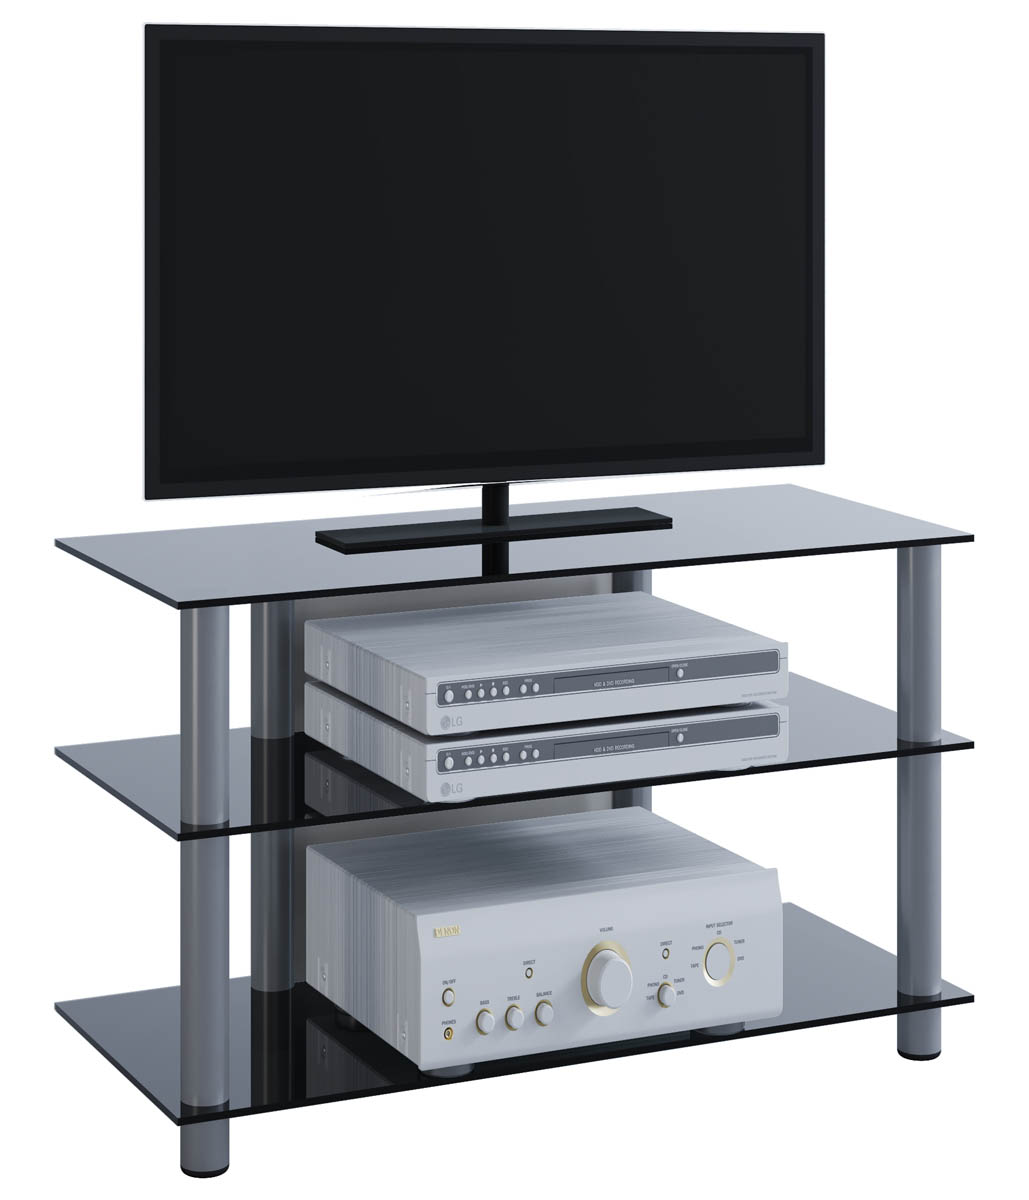 E-shop VCM TV stolek Sindas, černé sklo